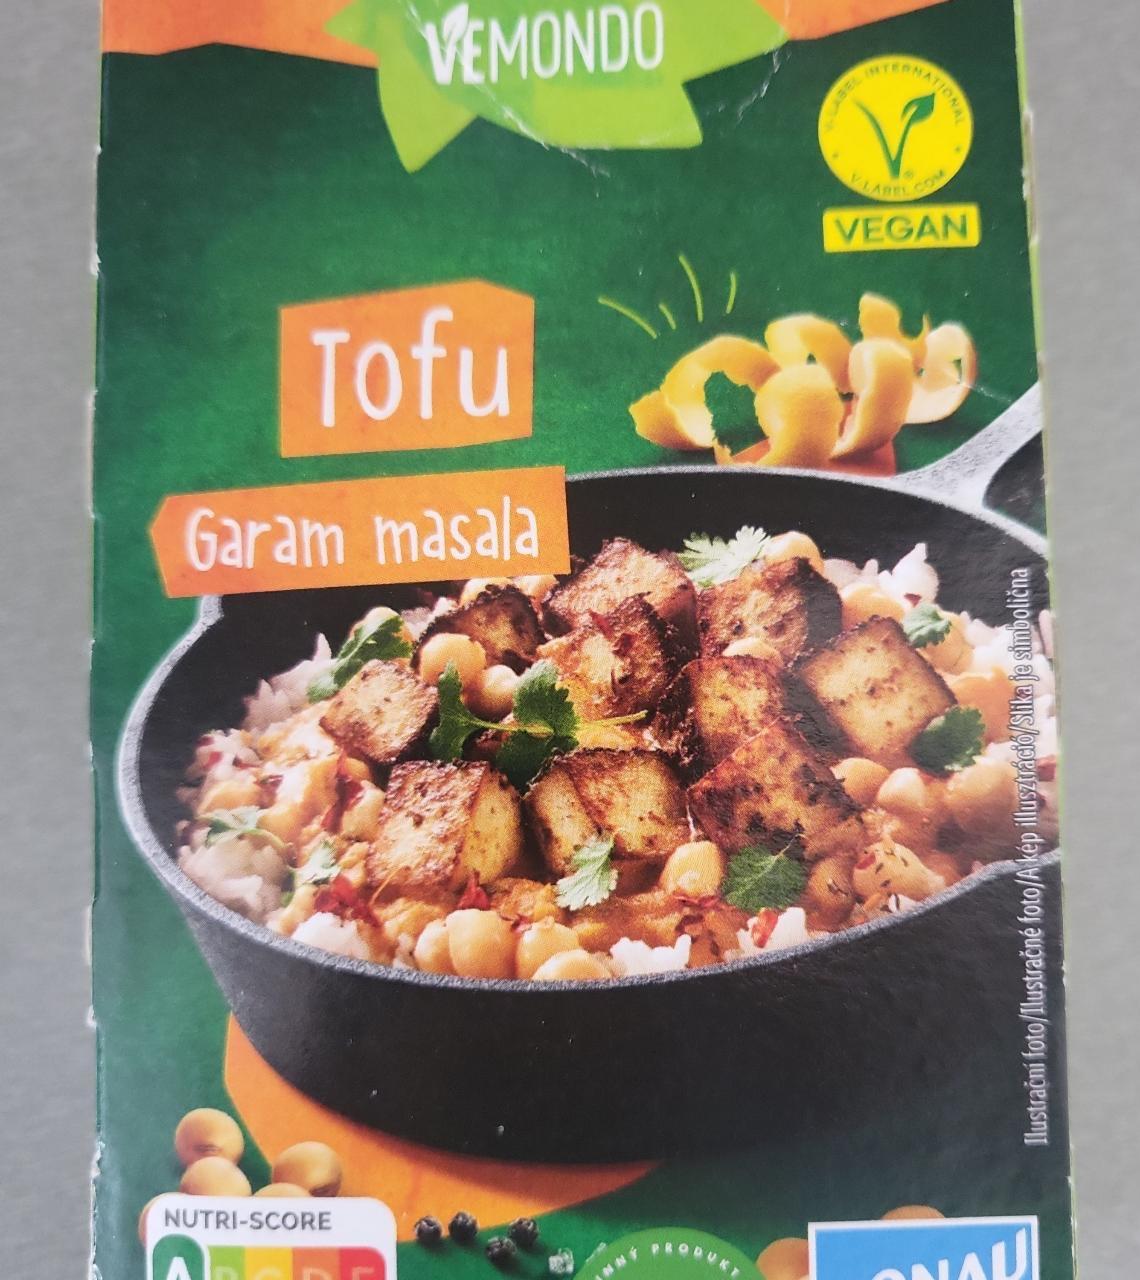 Képek - Tofu Garam masala Vemondo